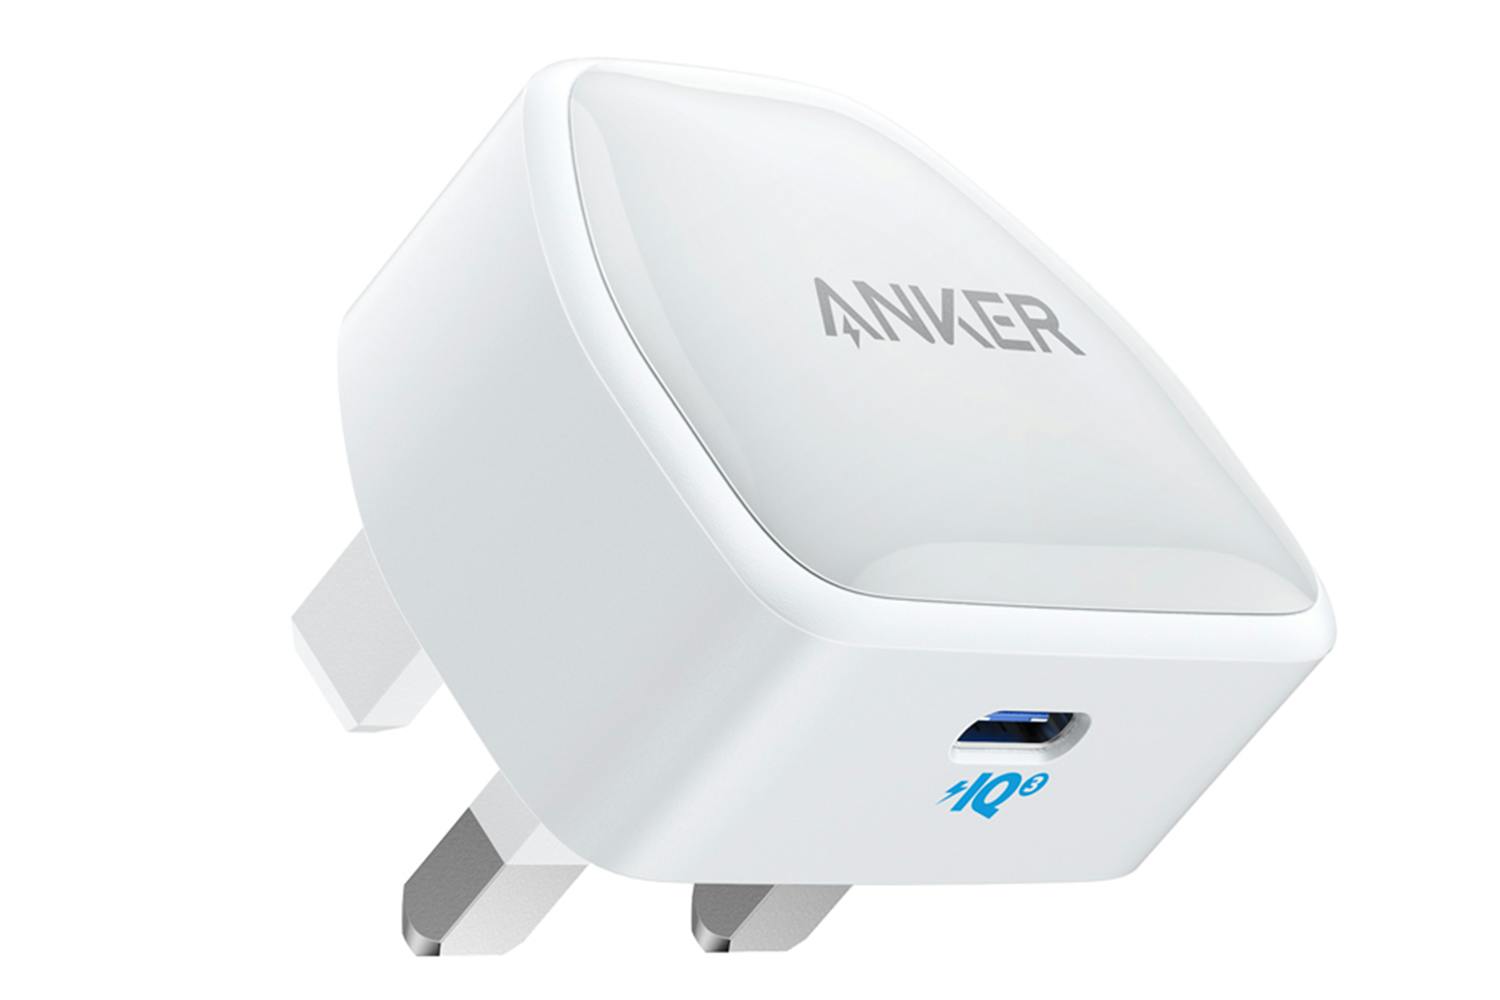 Buy Anker 737 GaNPrime 120W Laptop & Phone USB Charger Online